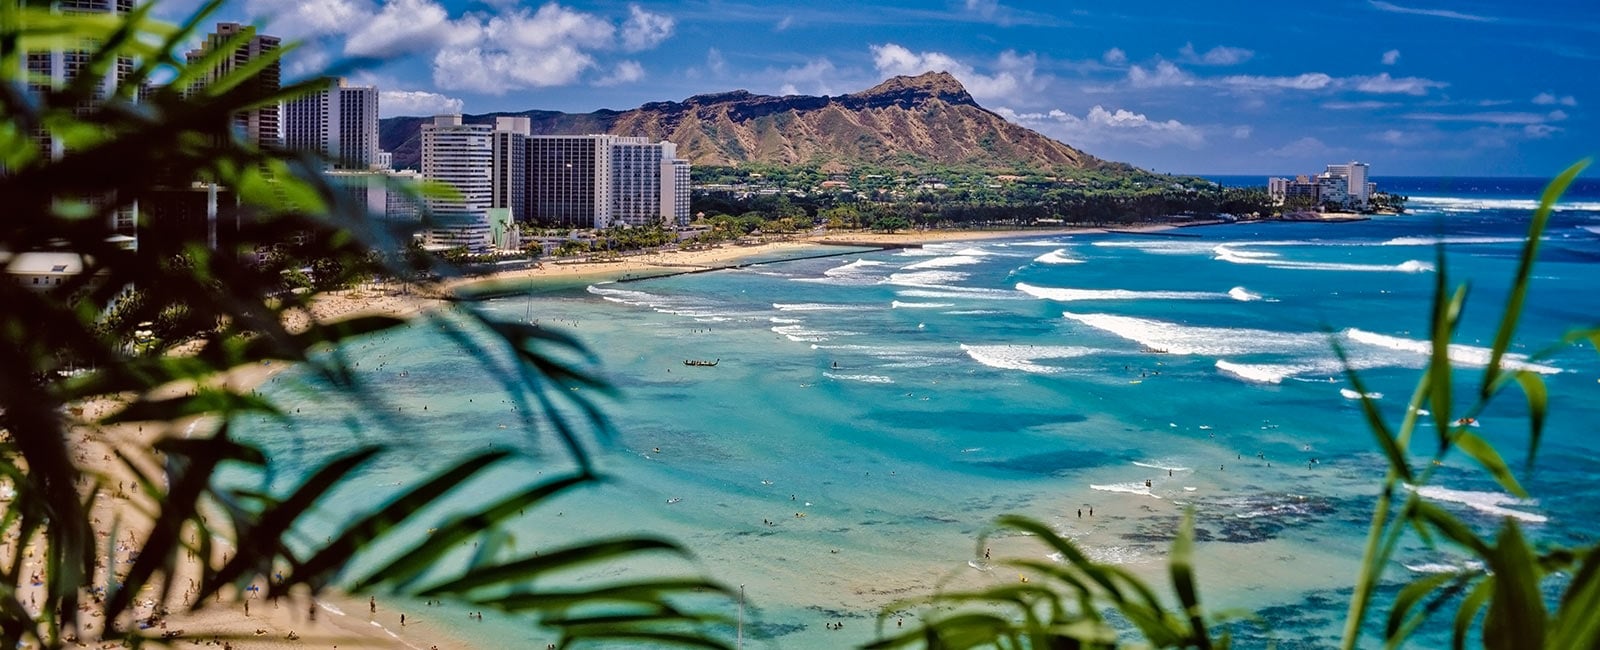 Enjoy a Honolulu, Hawaii vacation with Hilton Grand Vacations